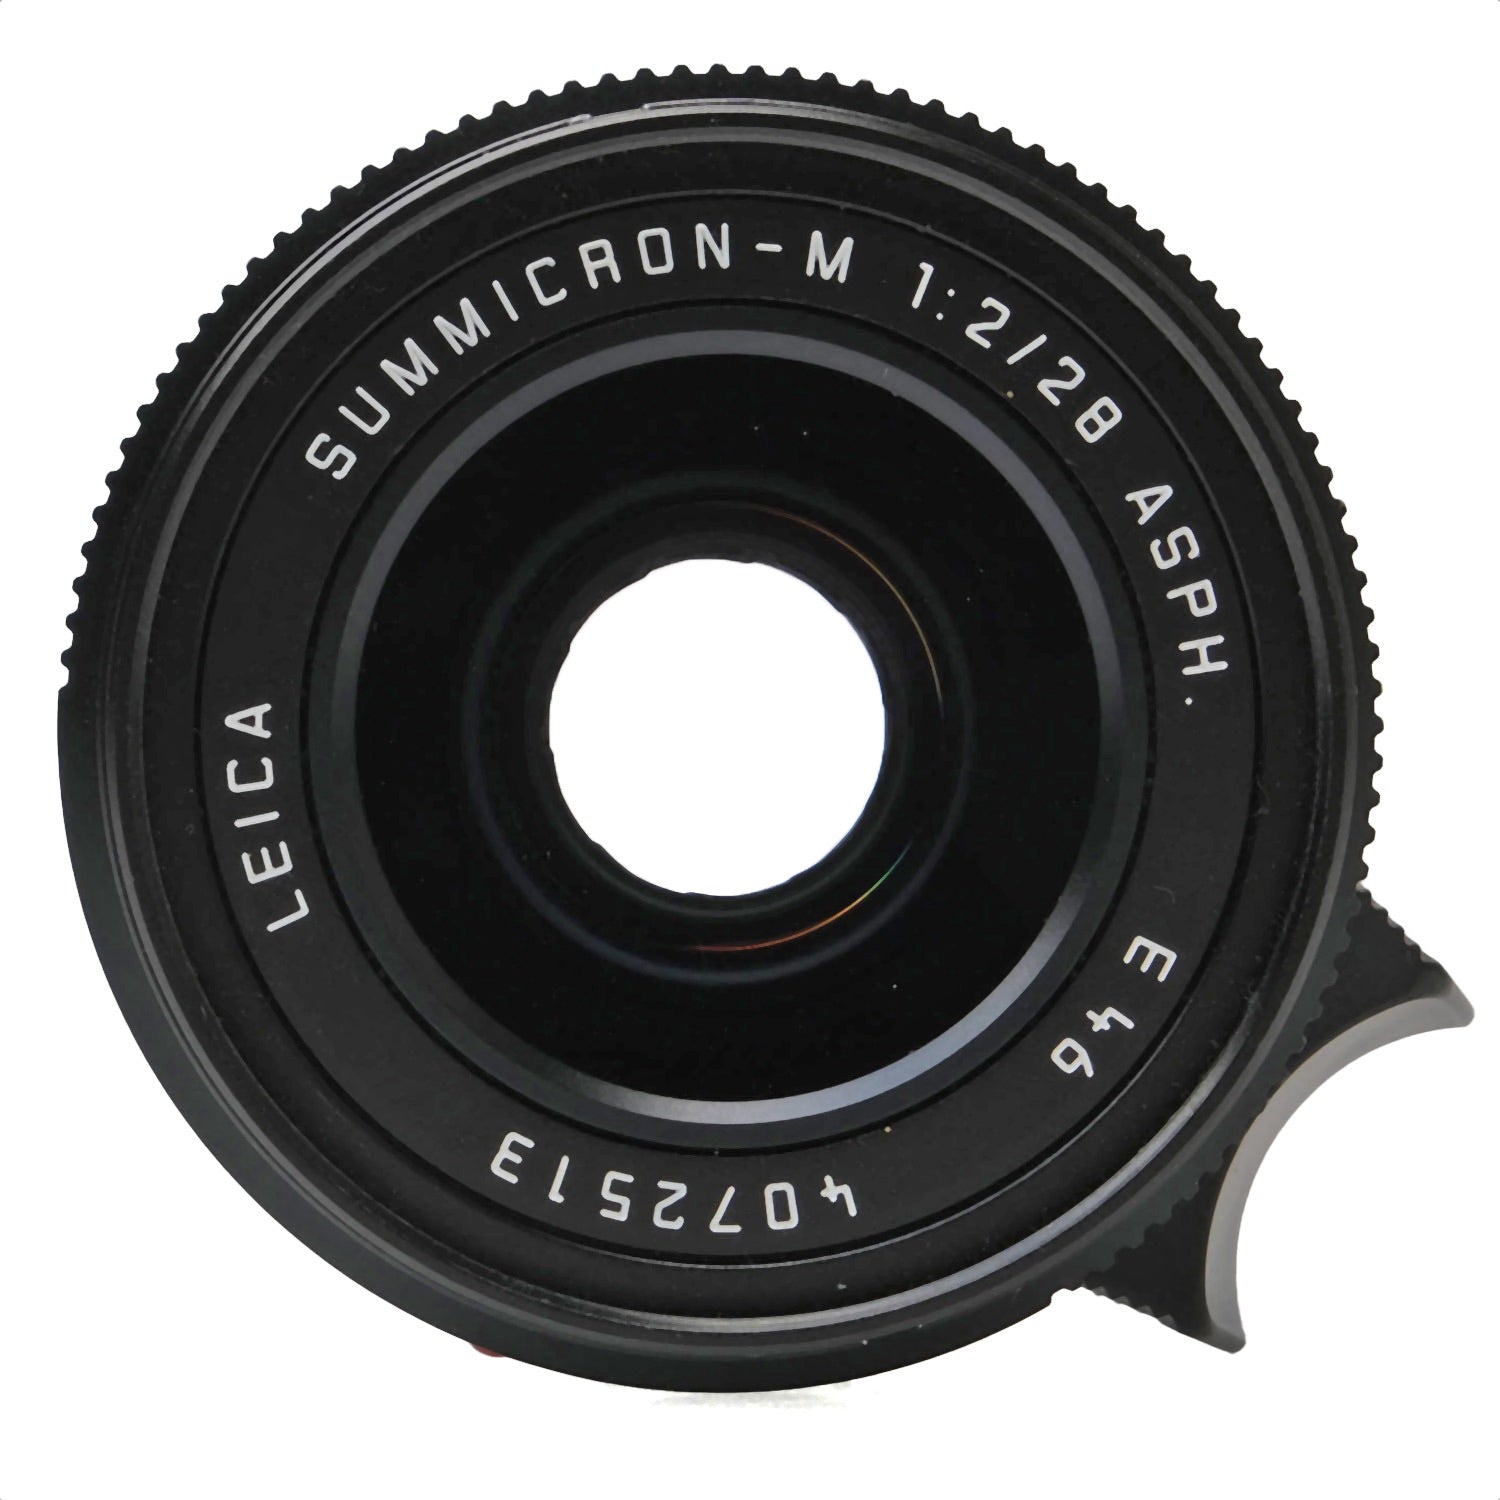 Leica 28mm f2 Summicron-M Asph, Black 4072513